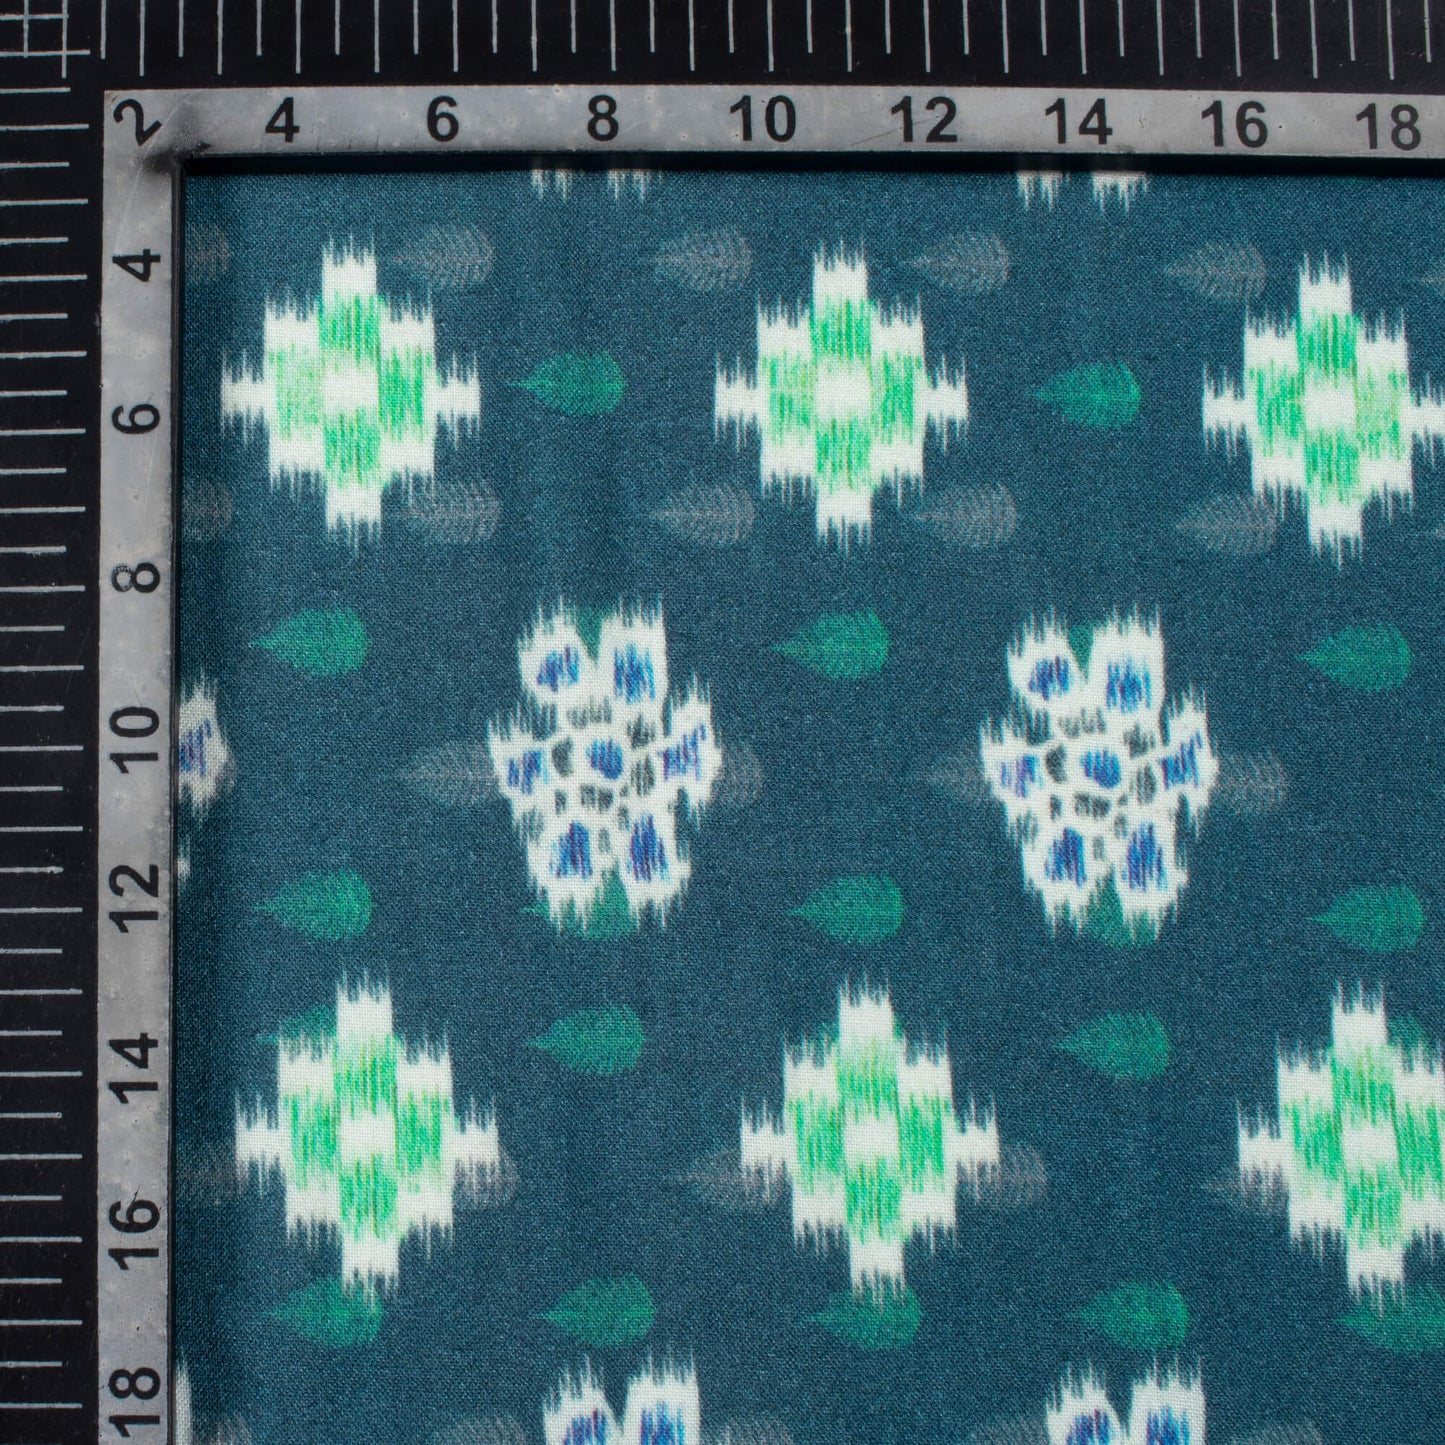 Pine Green And White Geometric Pattern Digital Print Viscose Rayon Fabric (Width 58 Inches)